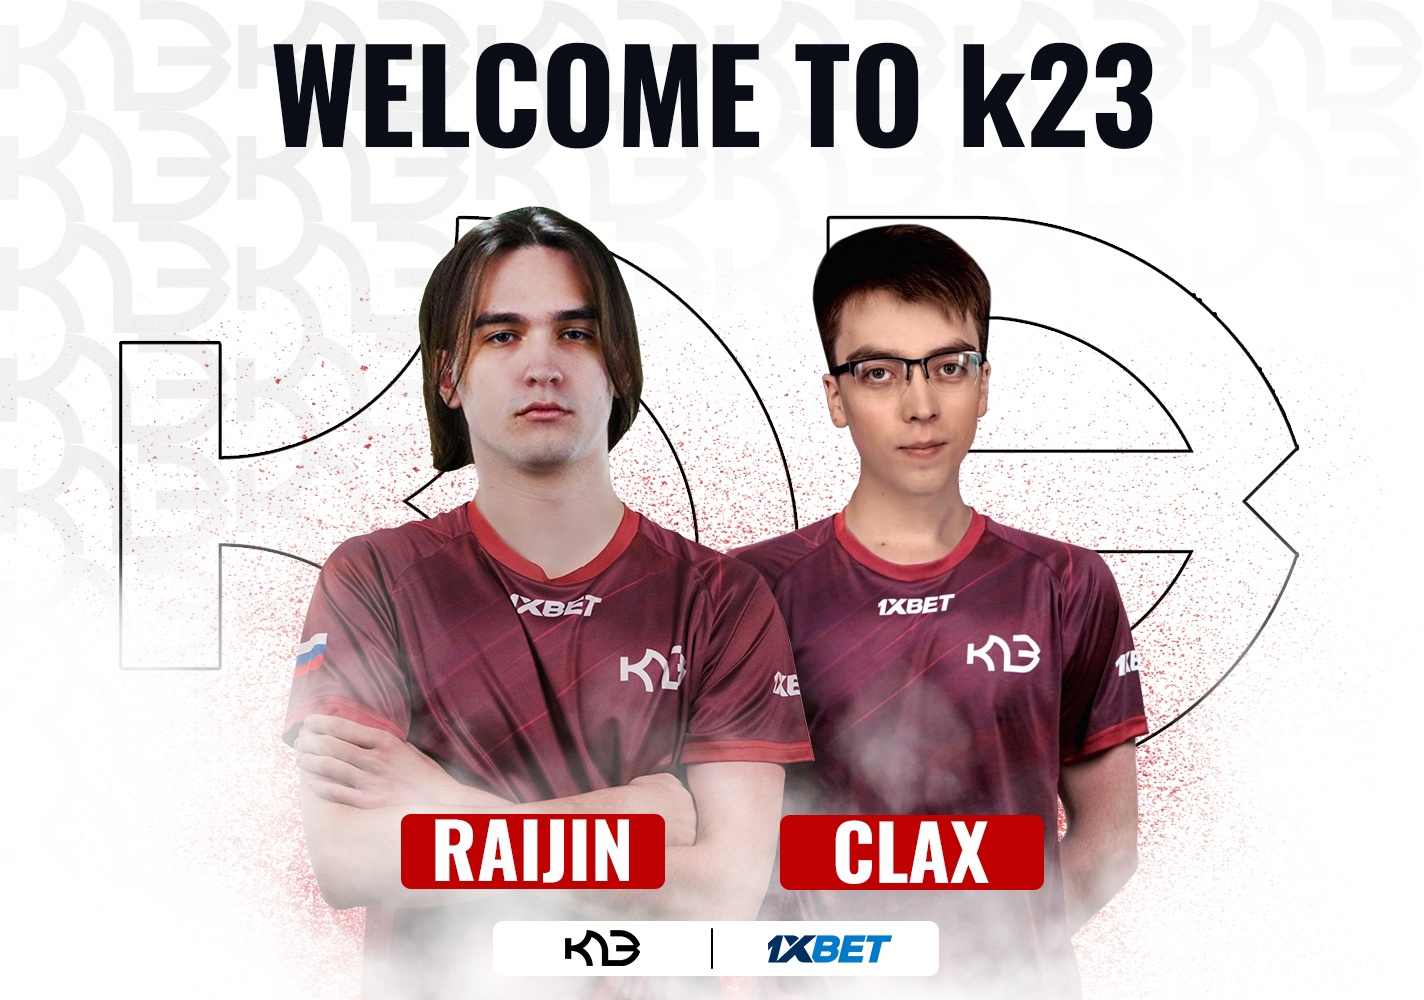 Raijin и clax – новые игроки K23